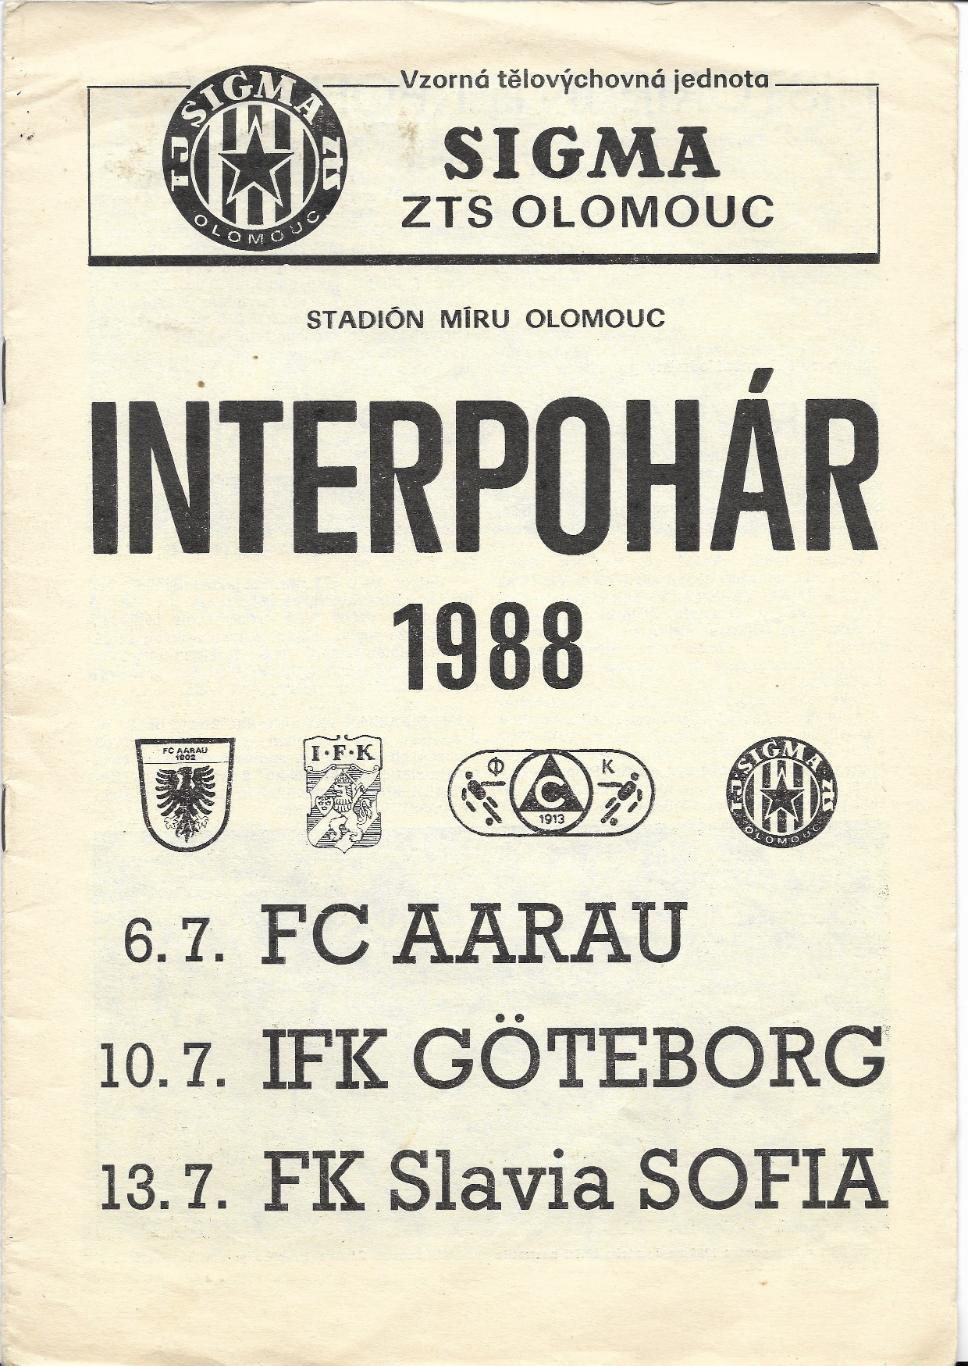 Sigma_Olomouc_v_Aarau,_v_IFK _Goteborg,_v_Slavia_Sofia_19 88_interpohar